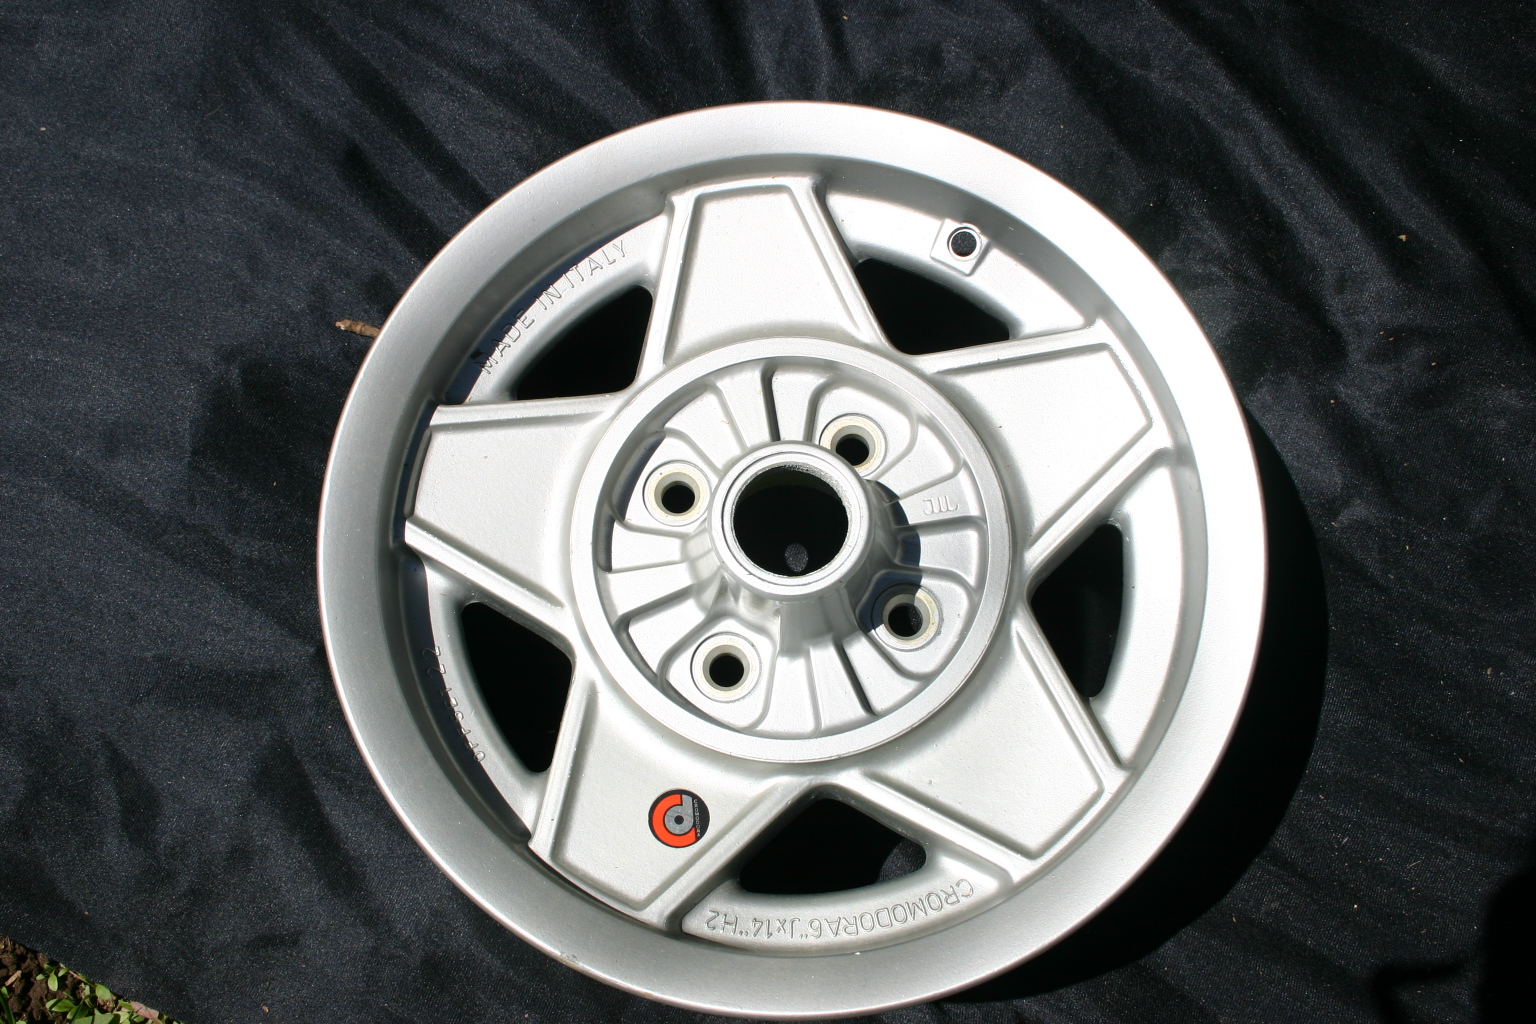 Vintage Cromodora Daytona wheels - For Sale - The Classic Zcar Club